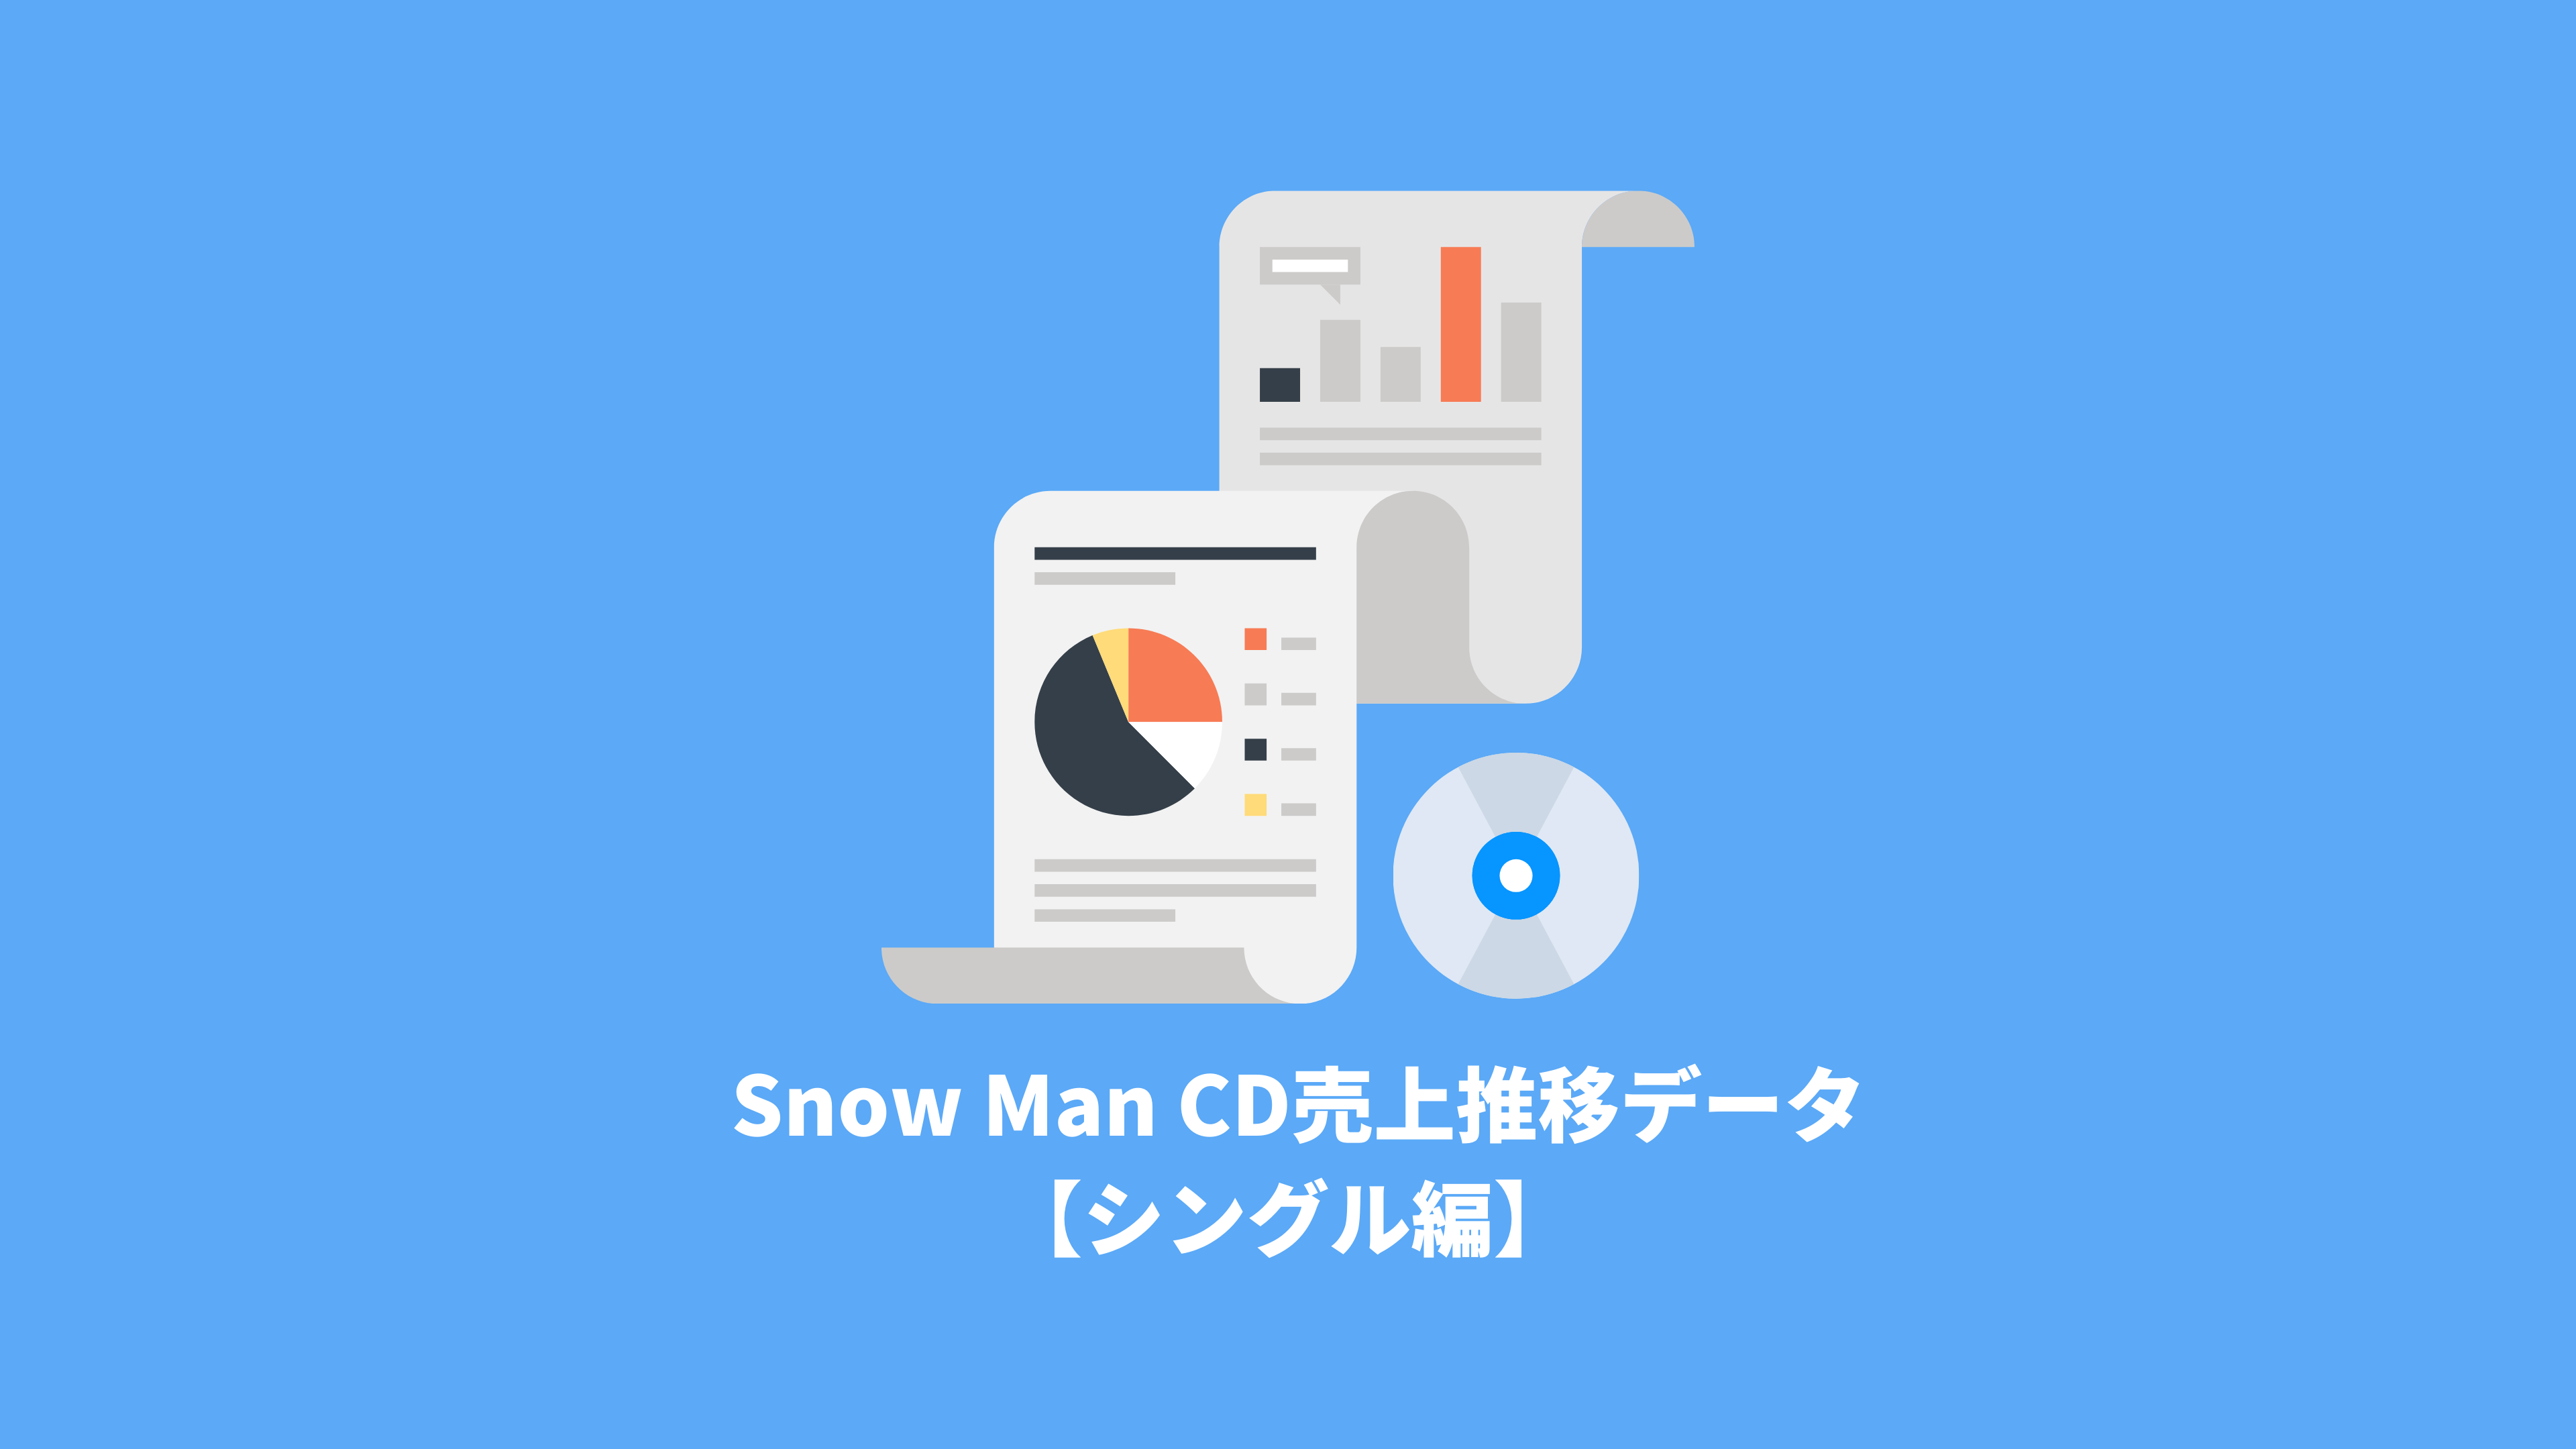 Snow Man CD売上全データ【シングル編】 | 推し活サポ